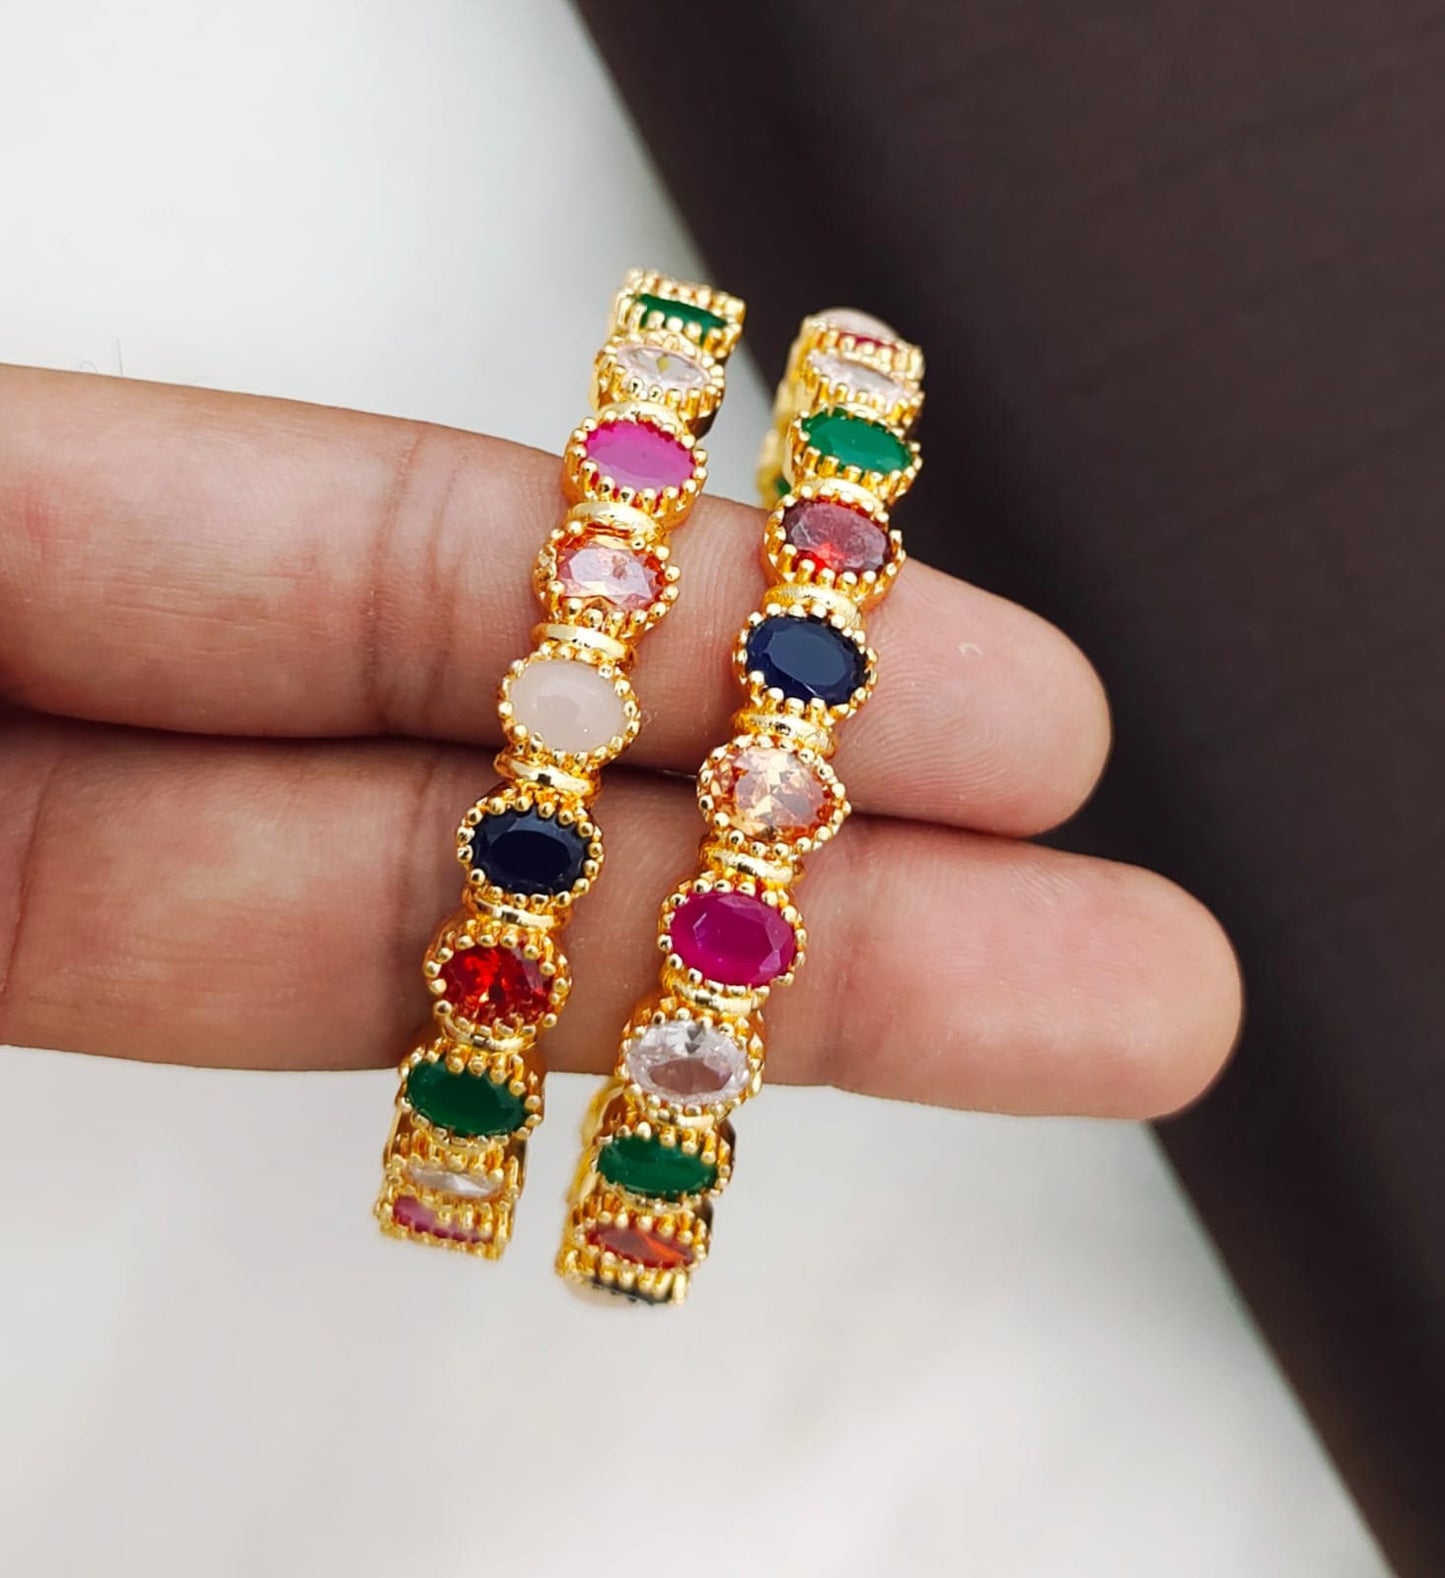 Designer Bracelets for Women, Bangles and More